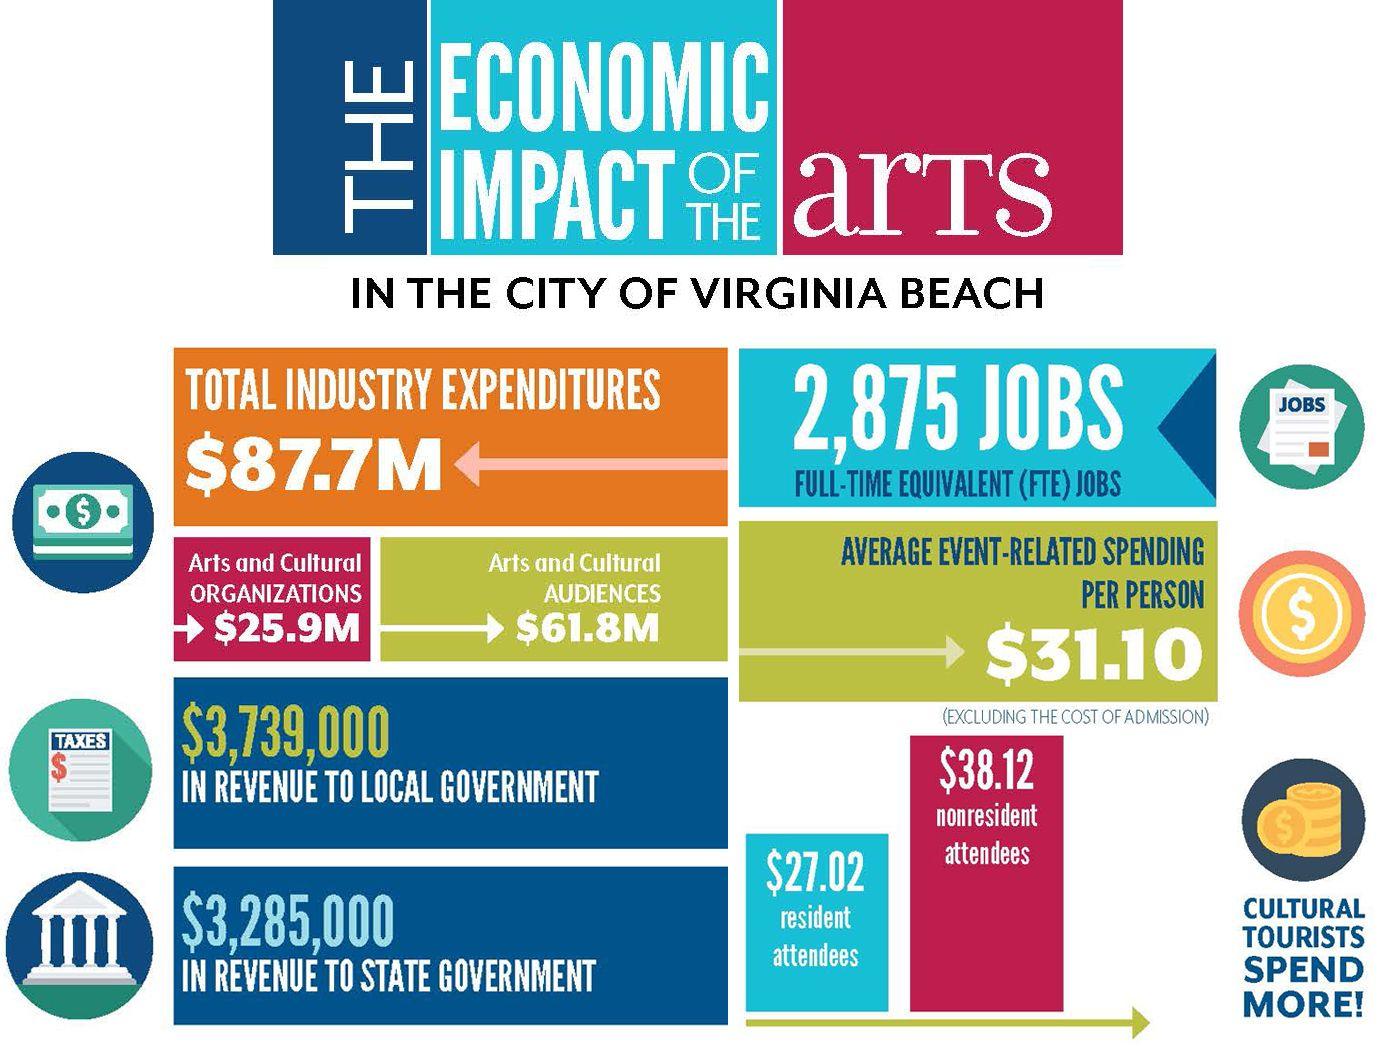 VBgov Logo - Arts Economic Impact - VBgov.com of Virginia Beach